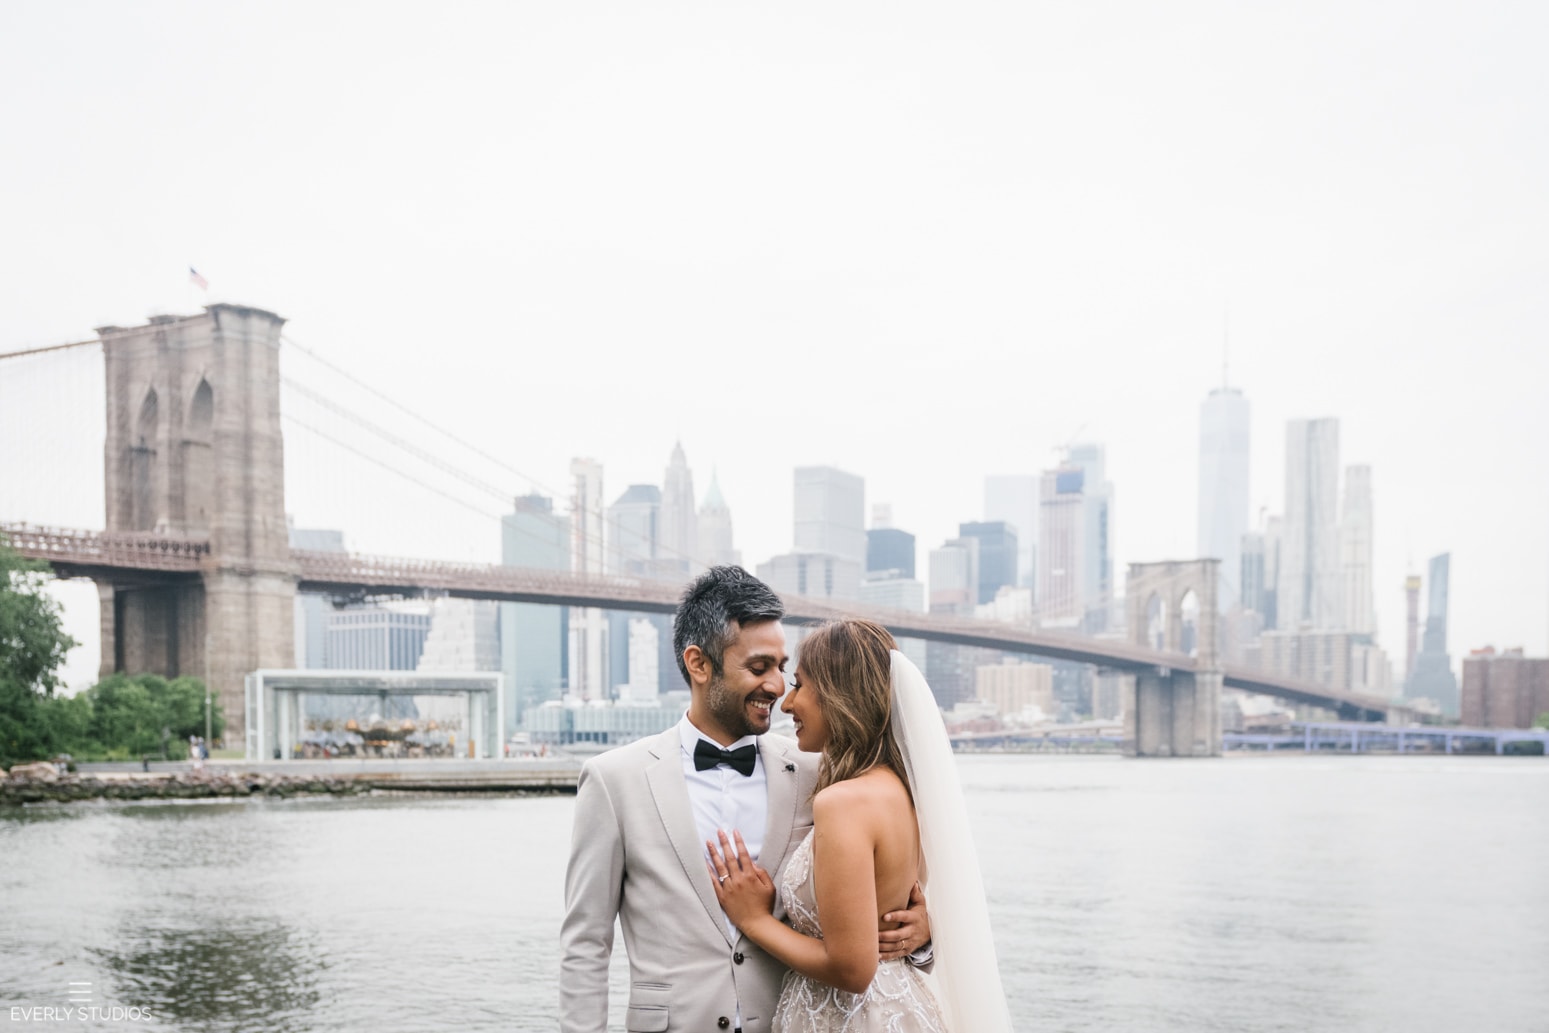 Brooklyn Bridge Park wedding photos. Photo by NYC wedding photographer Everly Studios, www.everlystudios.com